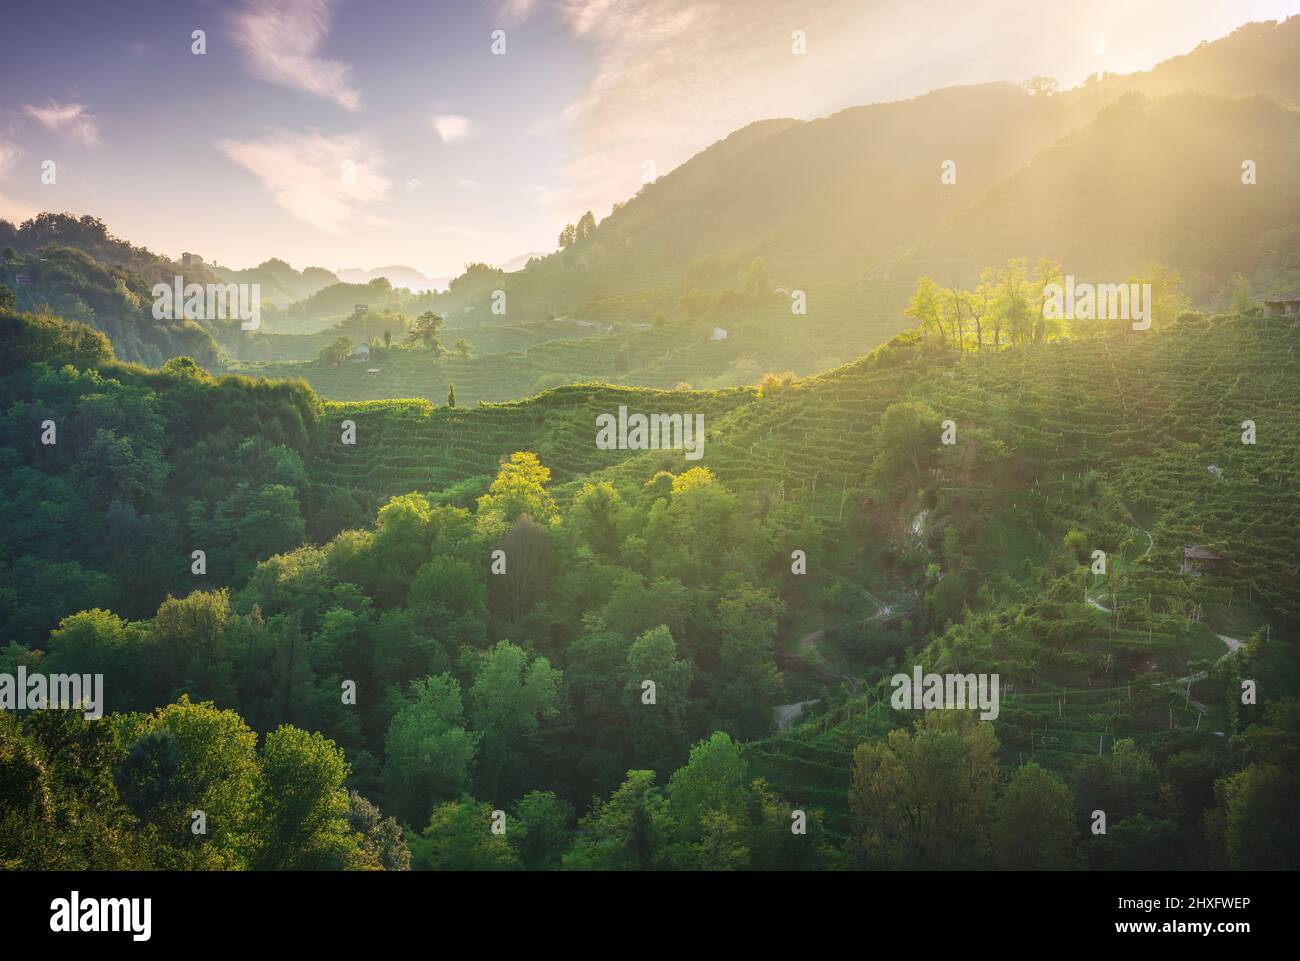 Prosecco Hills, wilde Landschaft mit steilen Weinbergen bei Sonnenuntergang. Unesco-Weltkulturerbe. Farra di Soligo. Region Venetien, Italien, Europa. Stockfoto